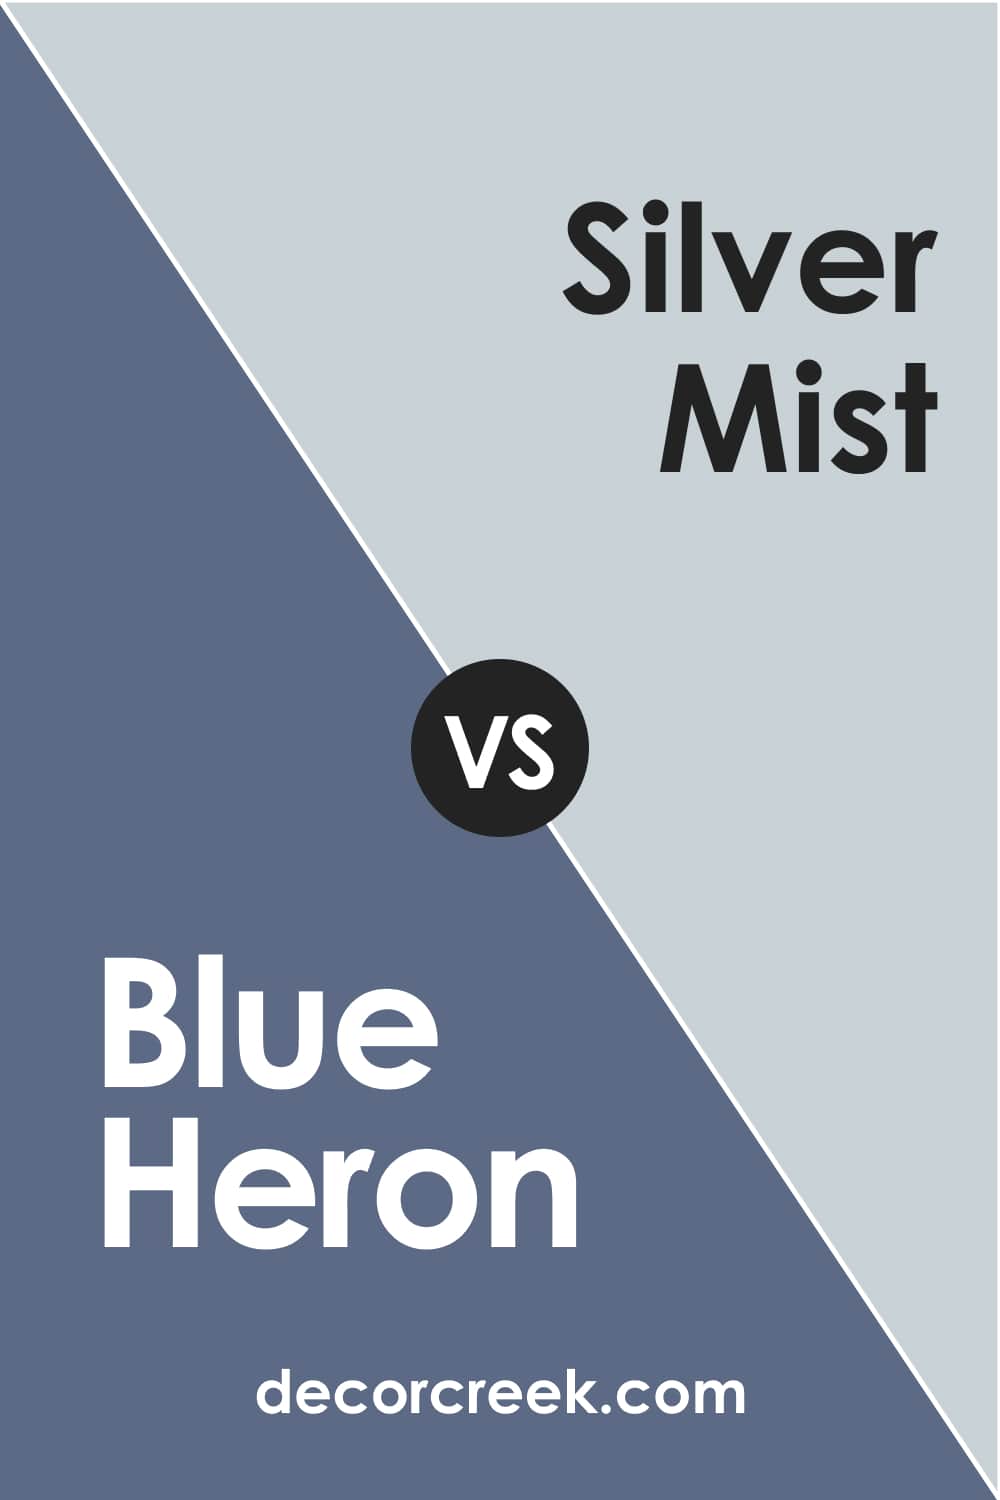 Blue Heron vs Silver Mist